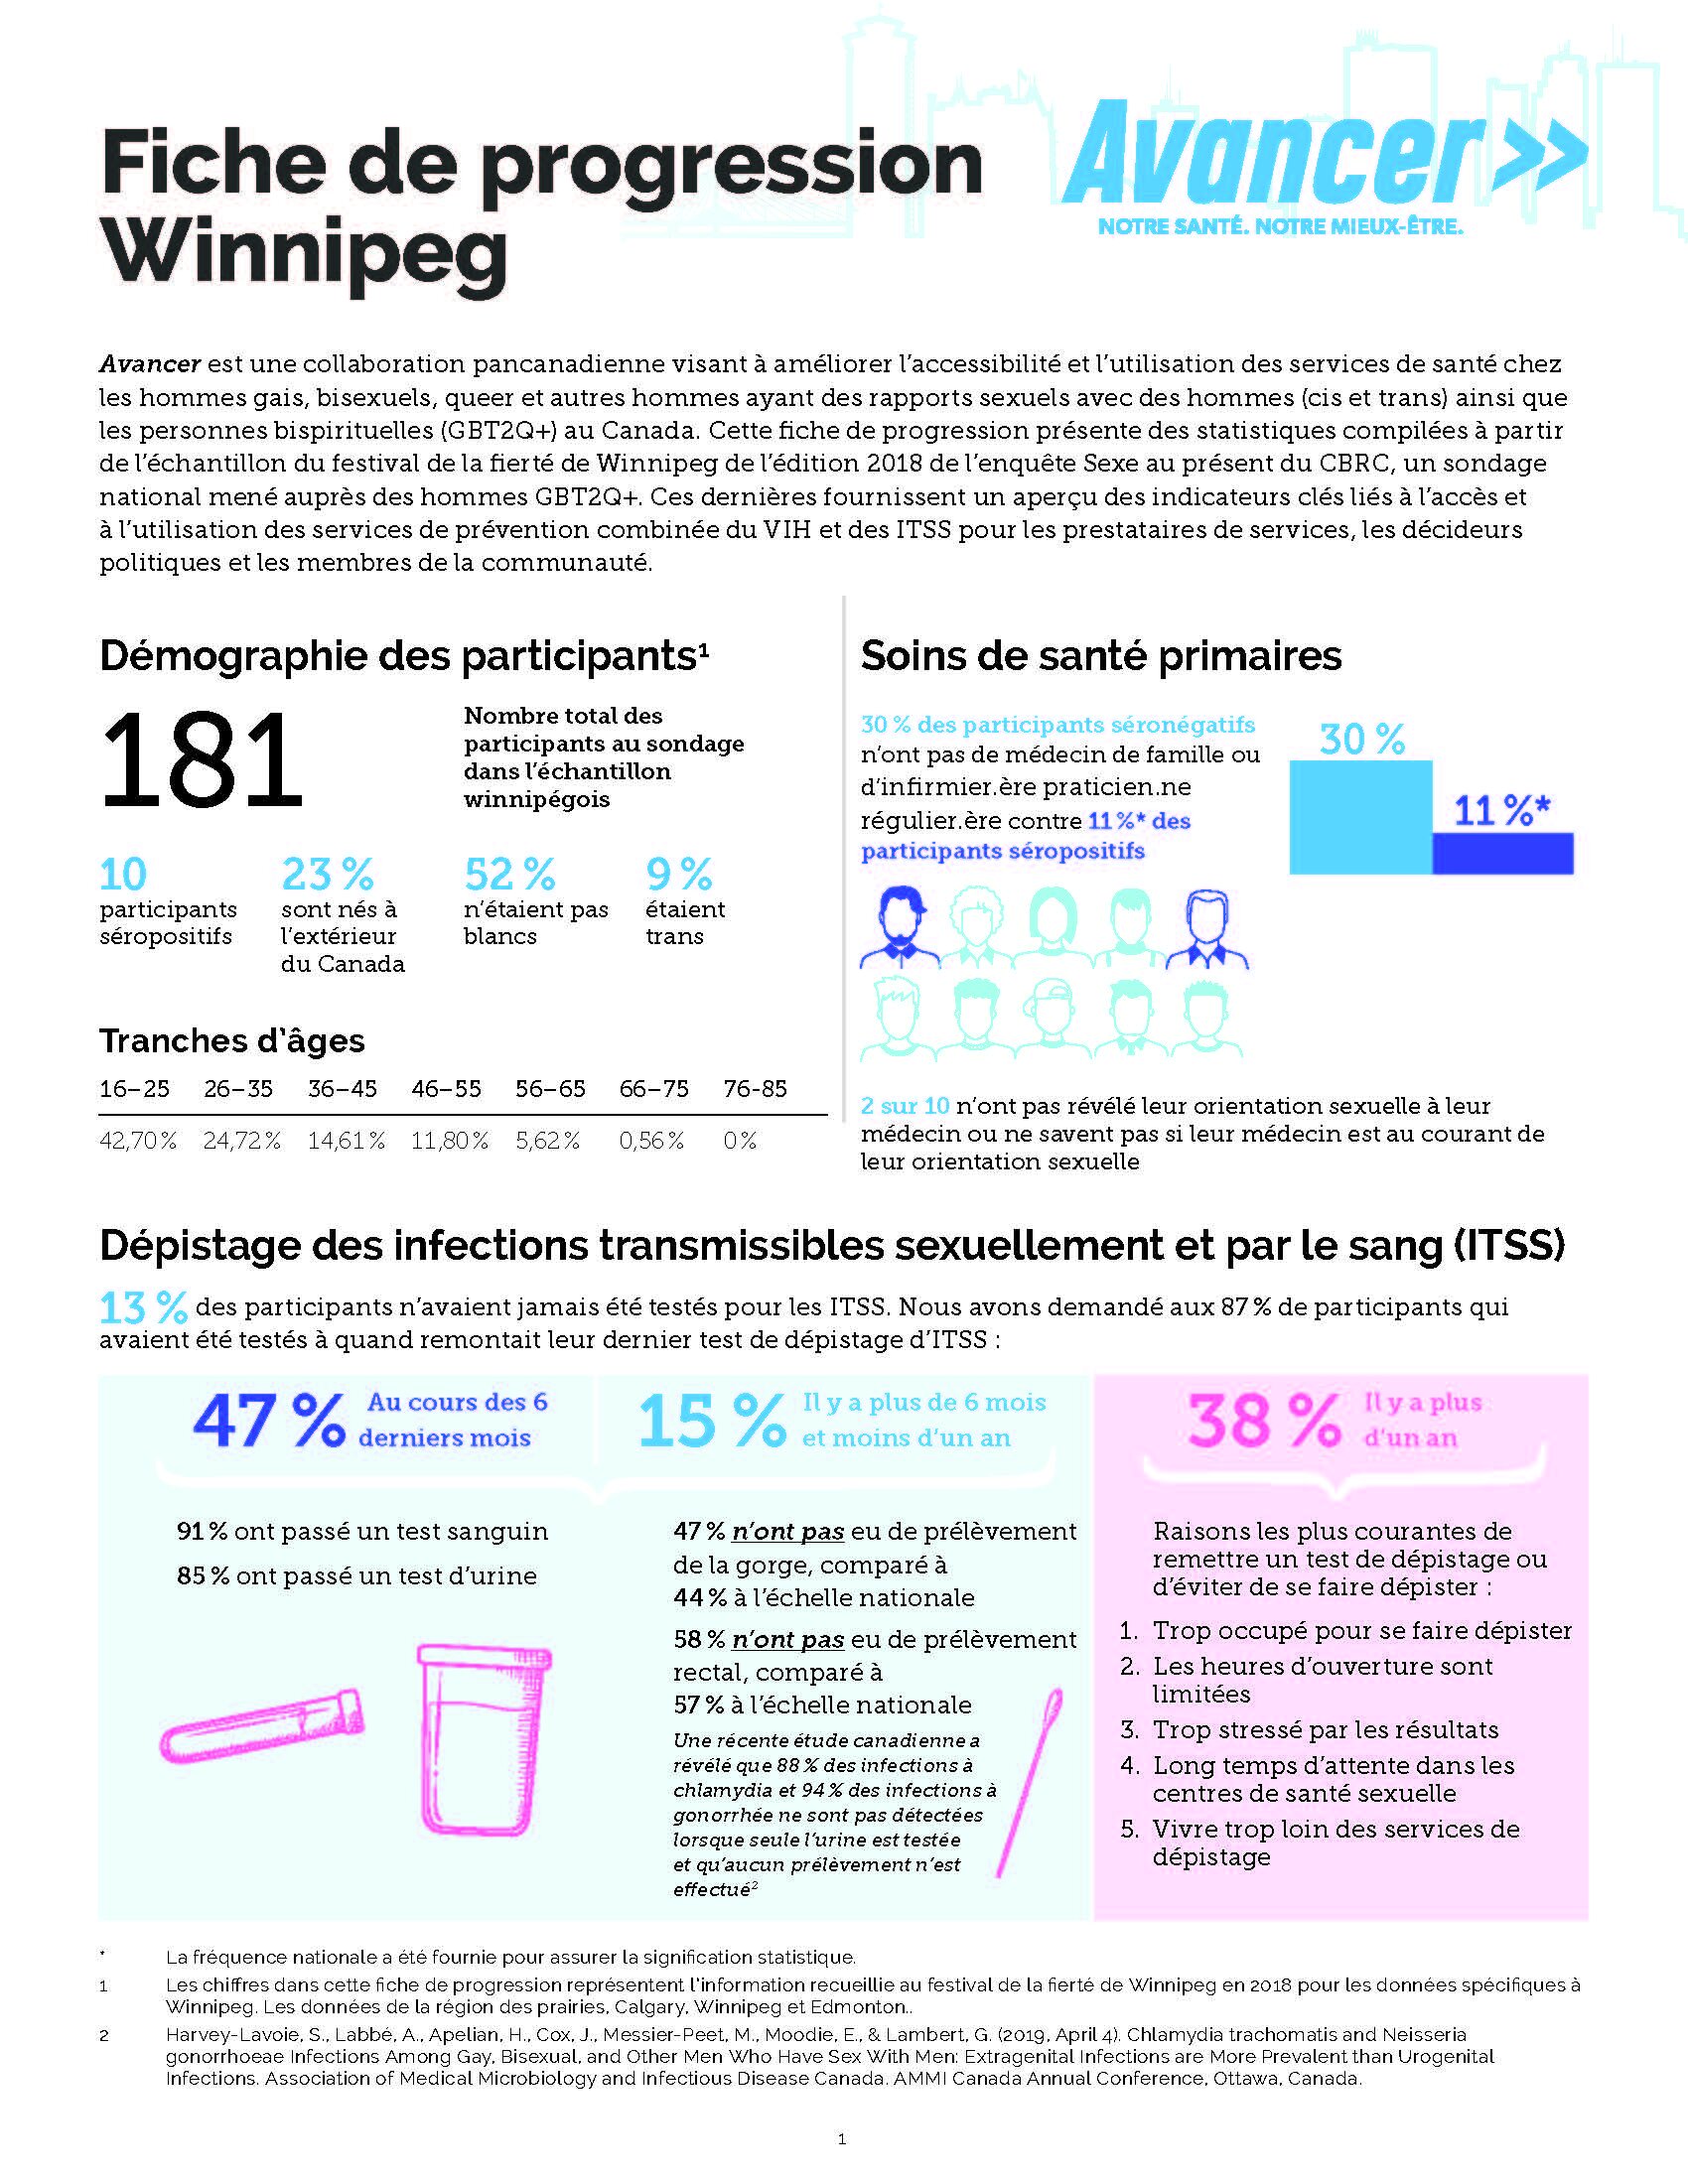 Avancer, Fiche de progression - Winnipeg (2021)_Page_1.jpg